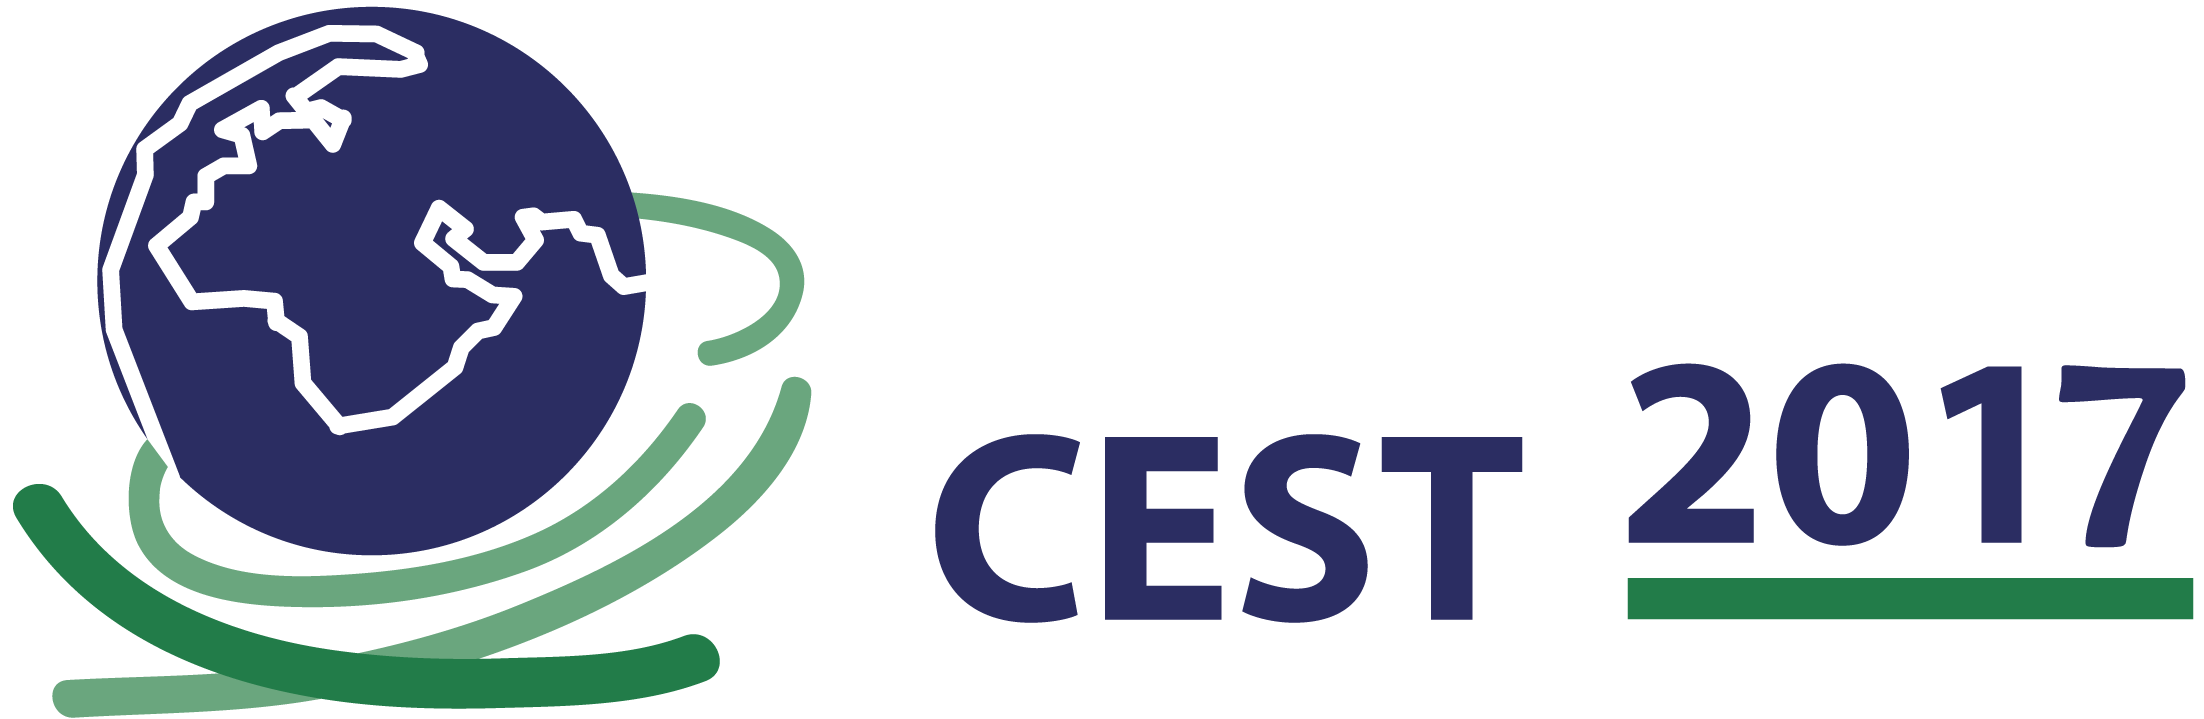 CEST 2017 logo